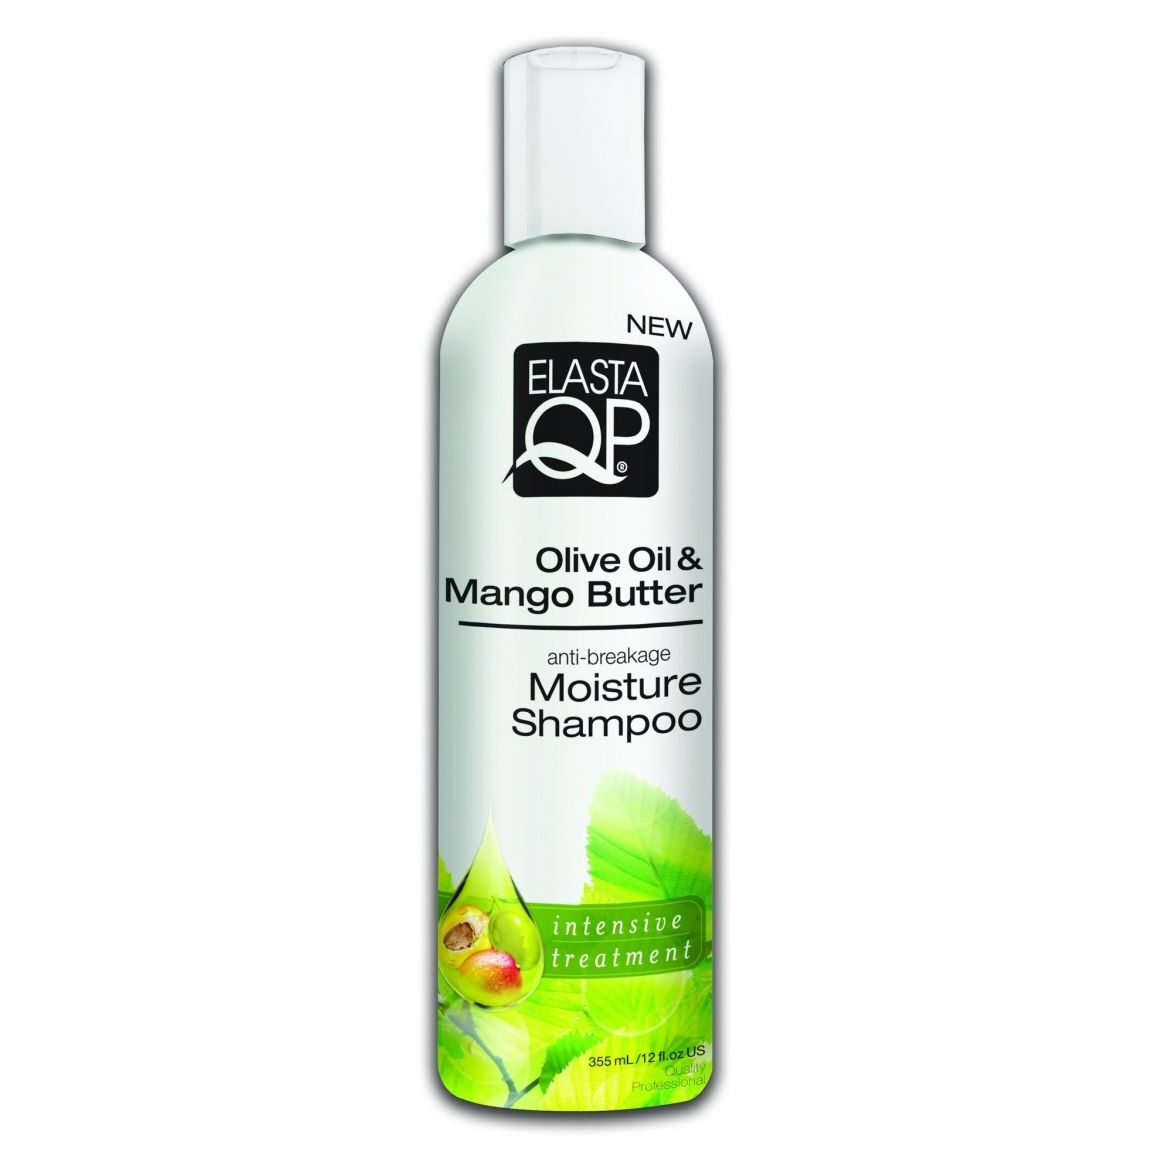 Elasta Qp Olive Oil & Mango Butter Moisture Shampoo 355 ml 